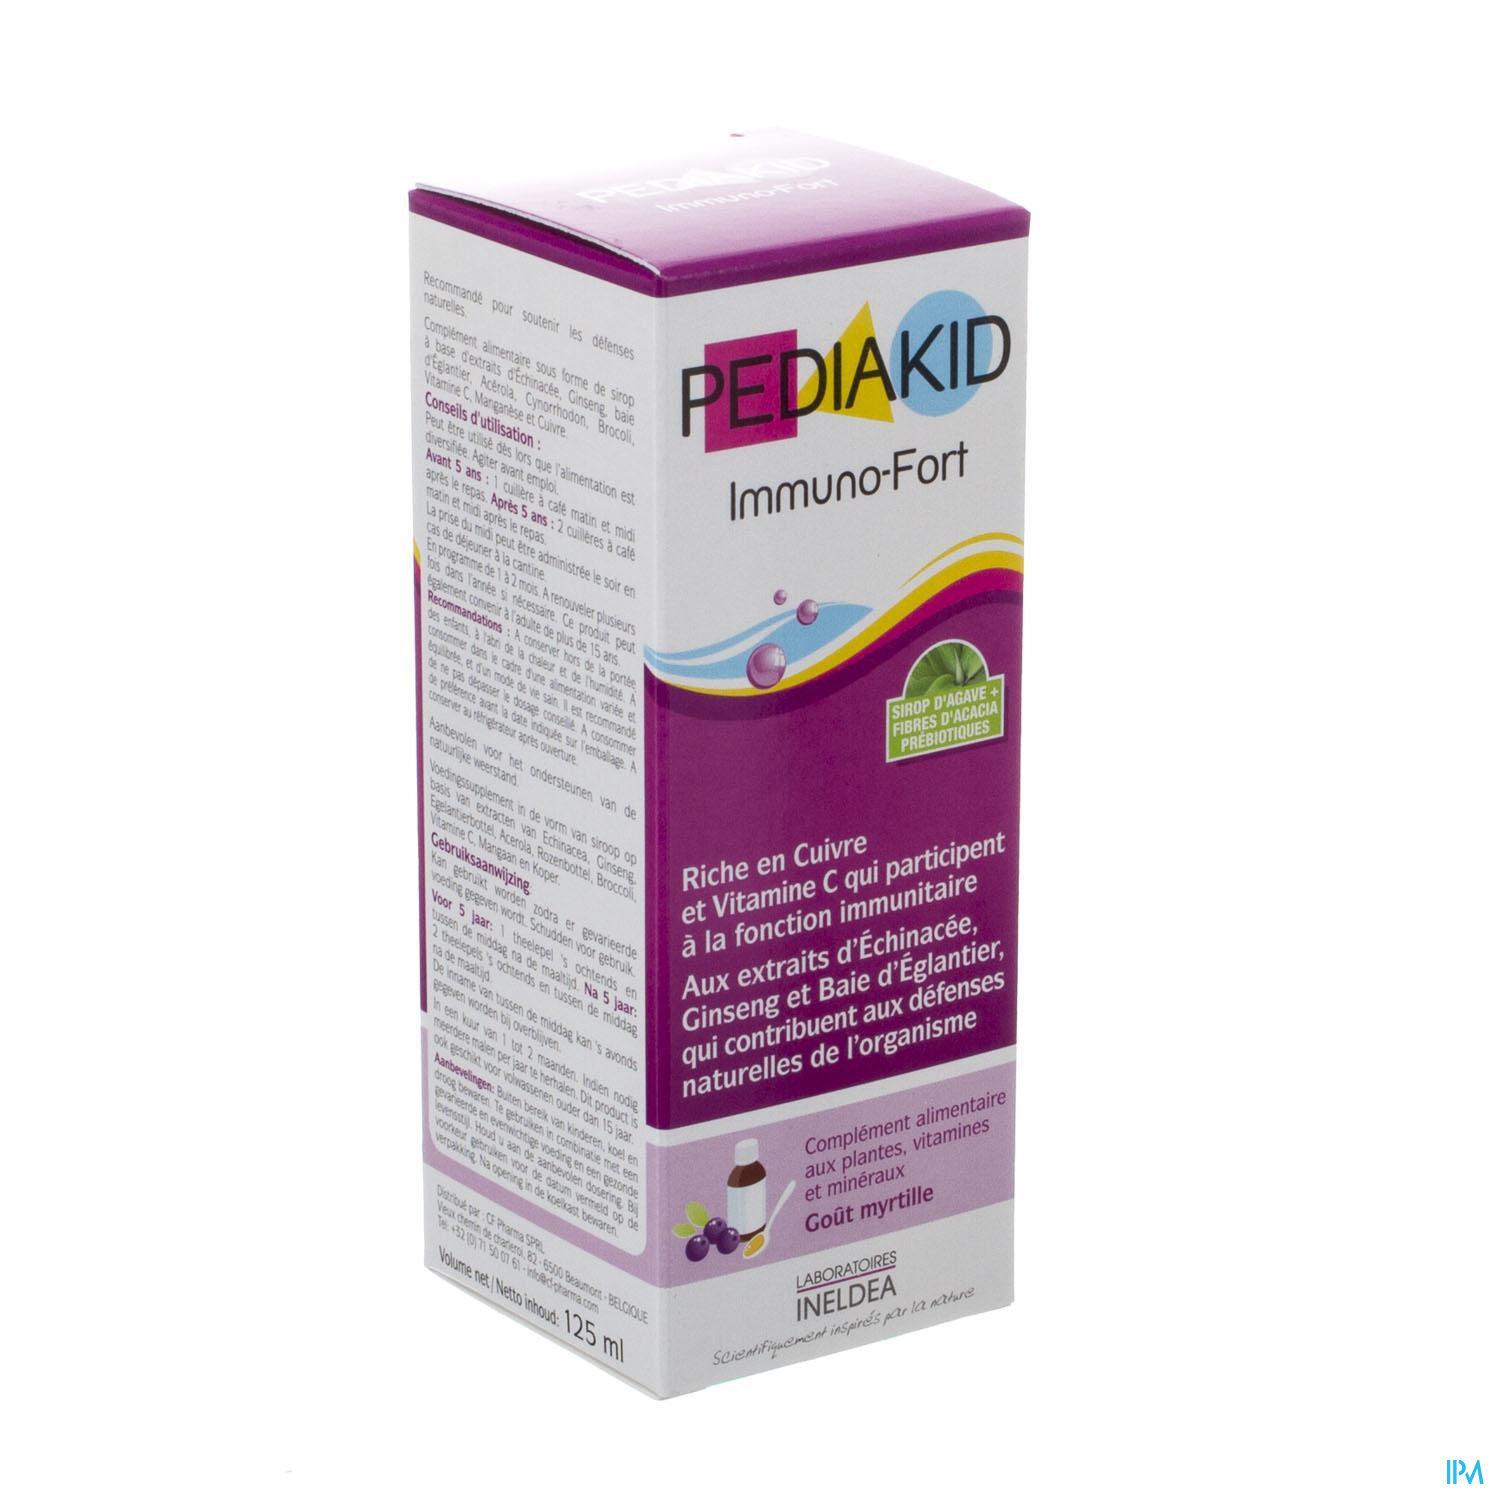 Pediakid immuno fort sirop - Renforce les défenses naturelles